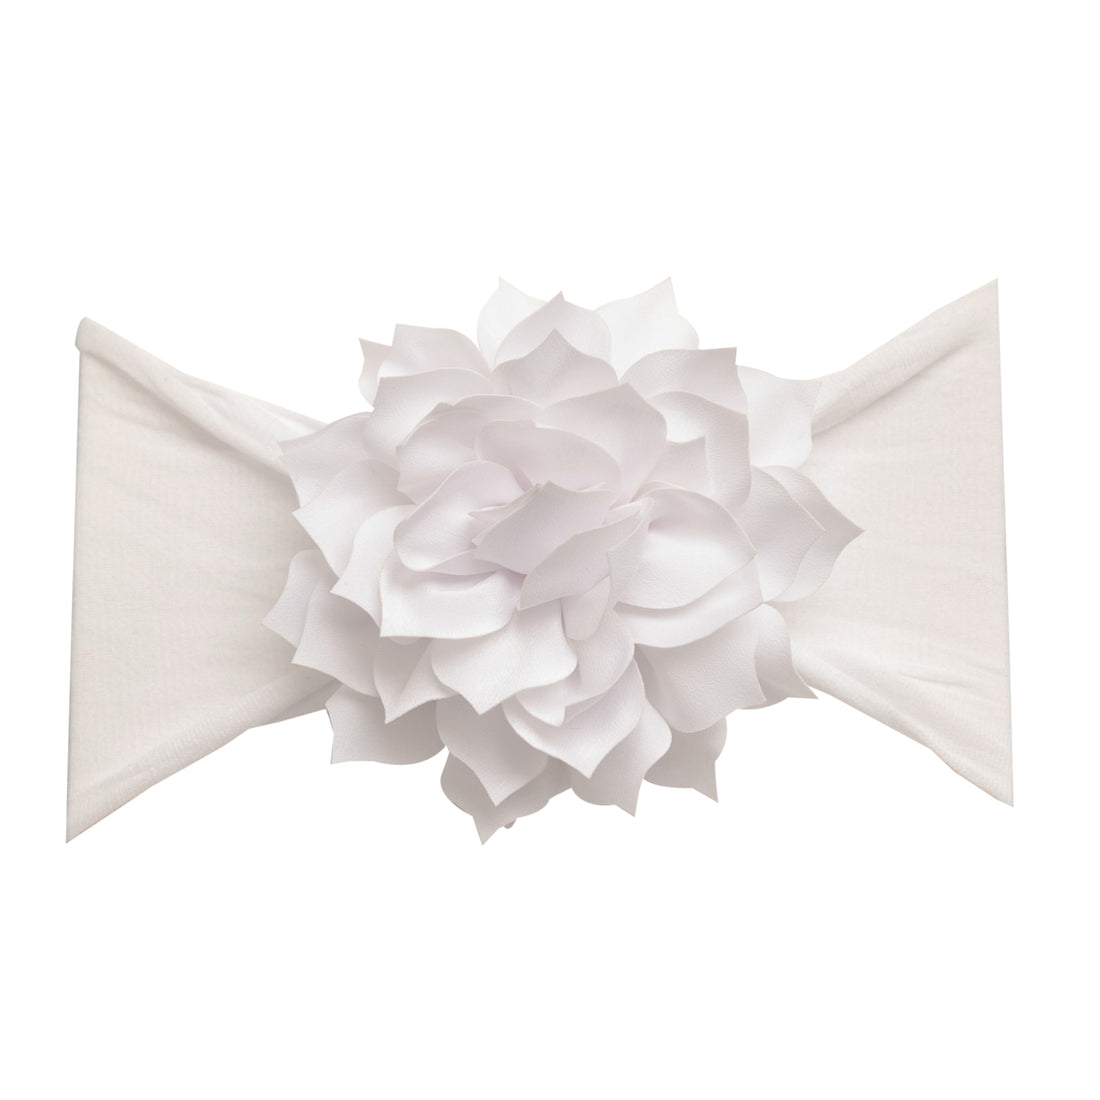 Dahlia Flower Headband - White